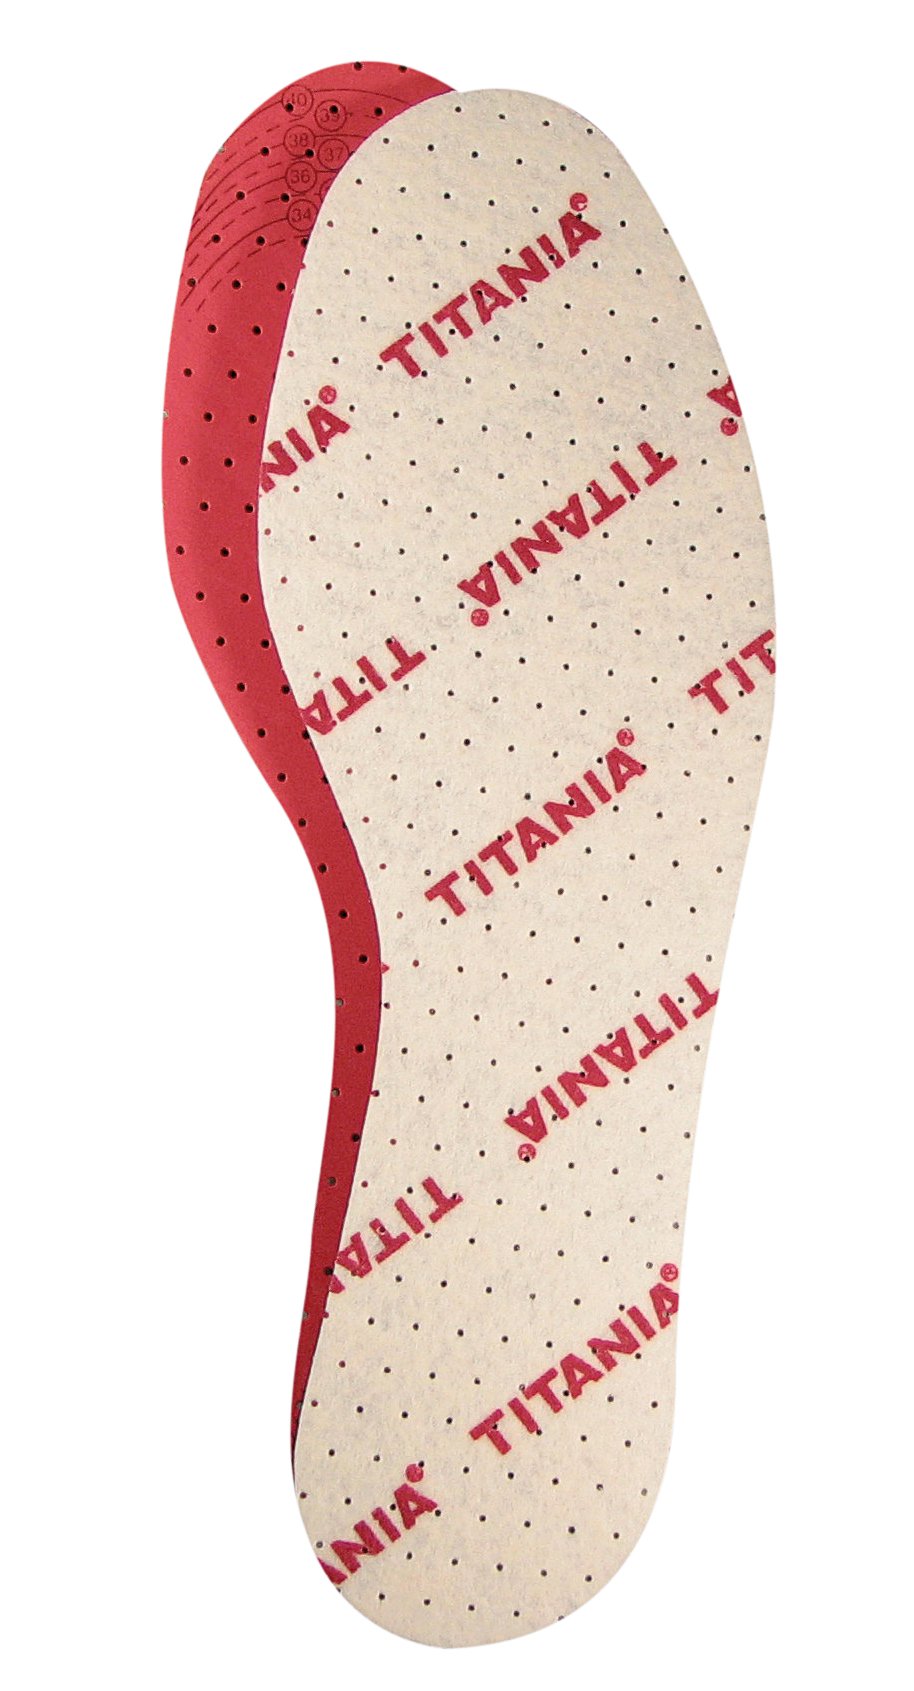 Стельки для обуви Titania Futura, с отверствиями,1 пара (5361/47) - фото 1